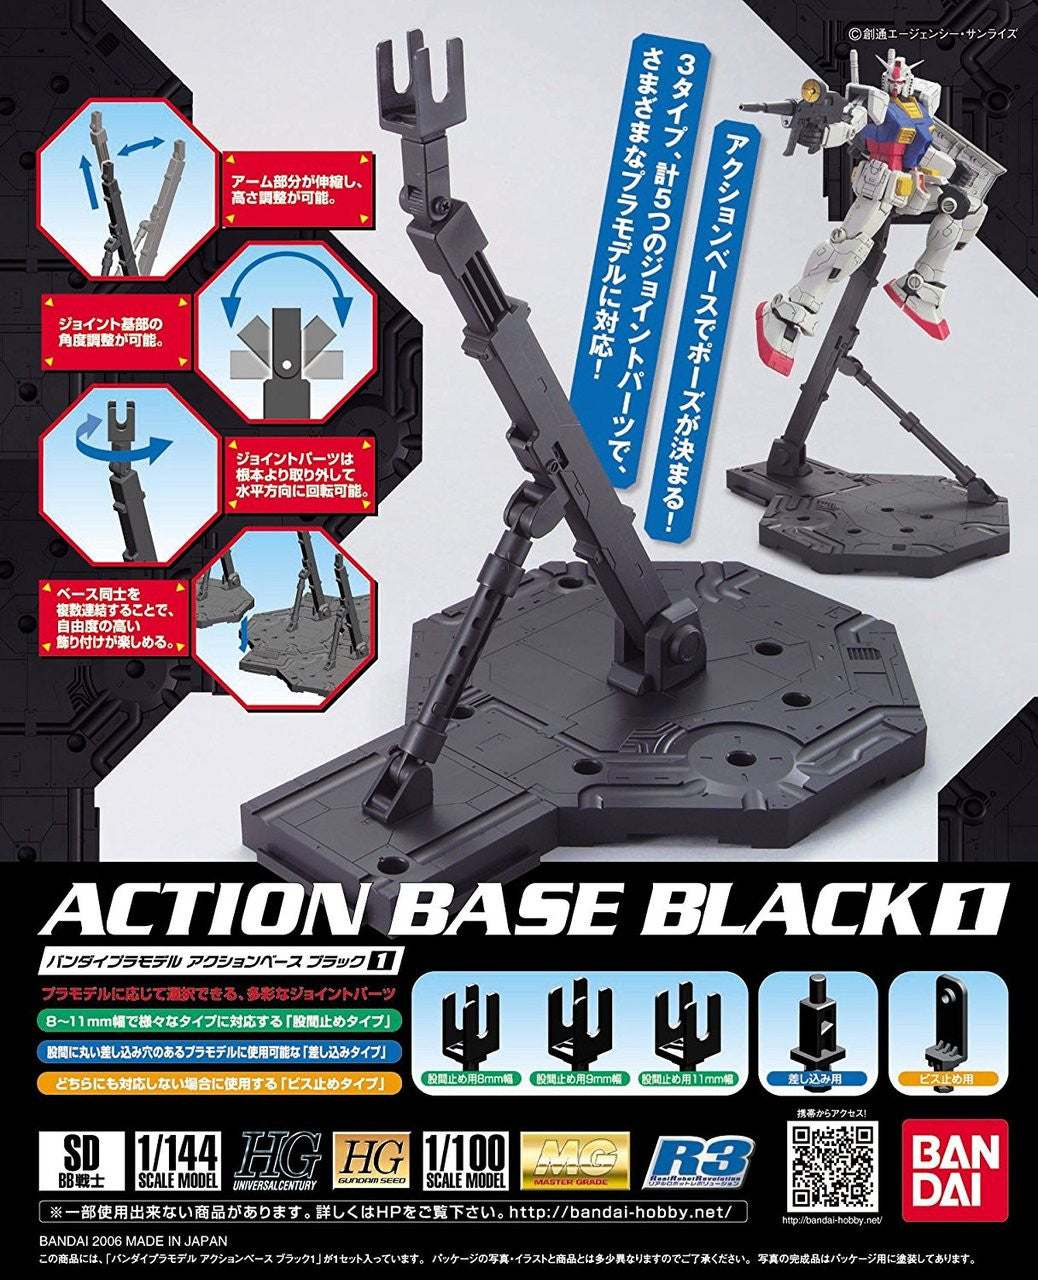 Action Base 1 for HG RG MG Gundam - Black